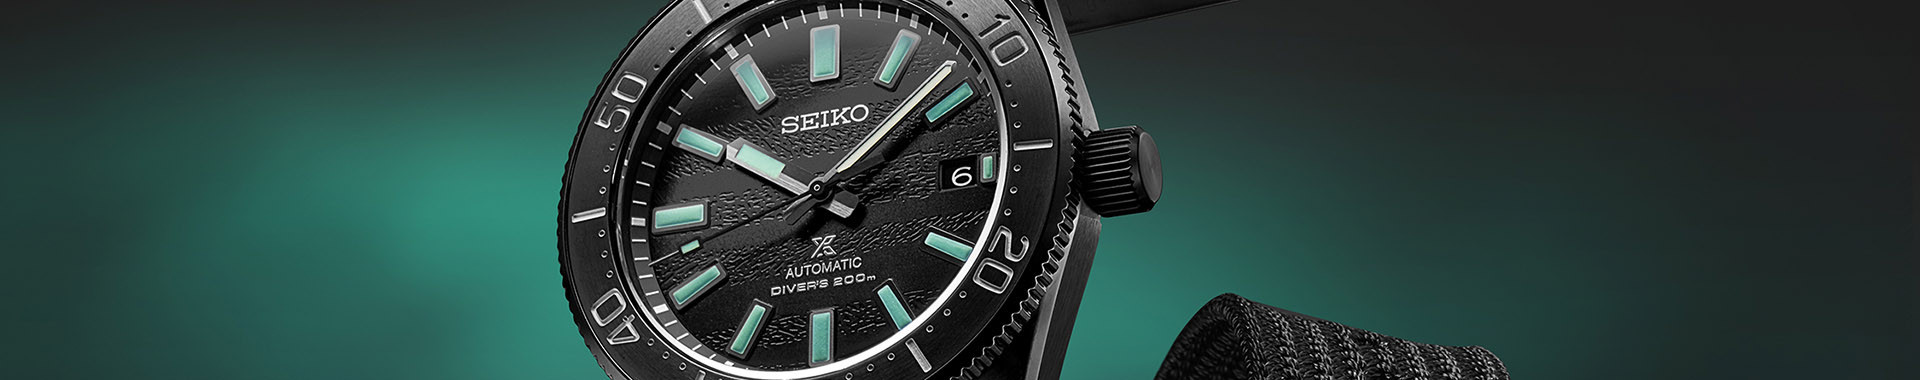 Seiko limited edition - Seiko Official Store